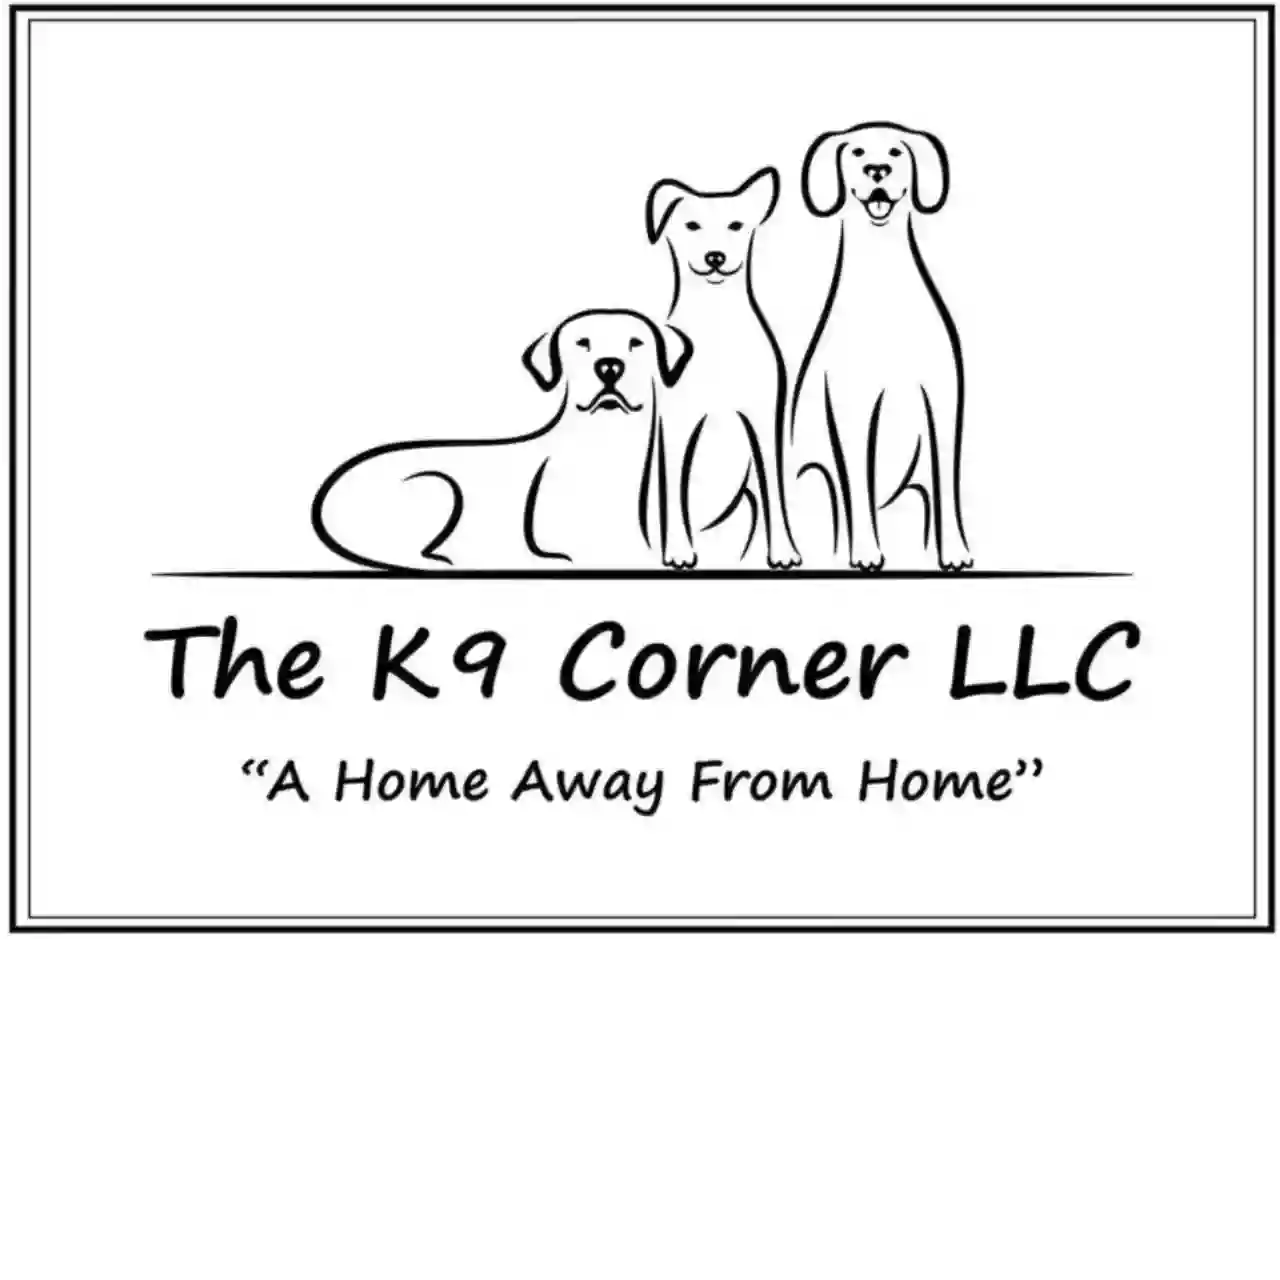 The K9 Corner LLC